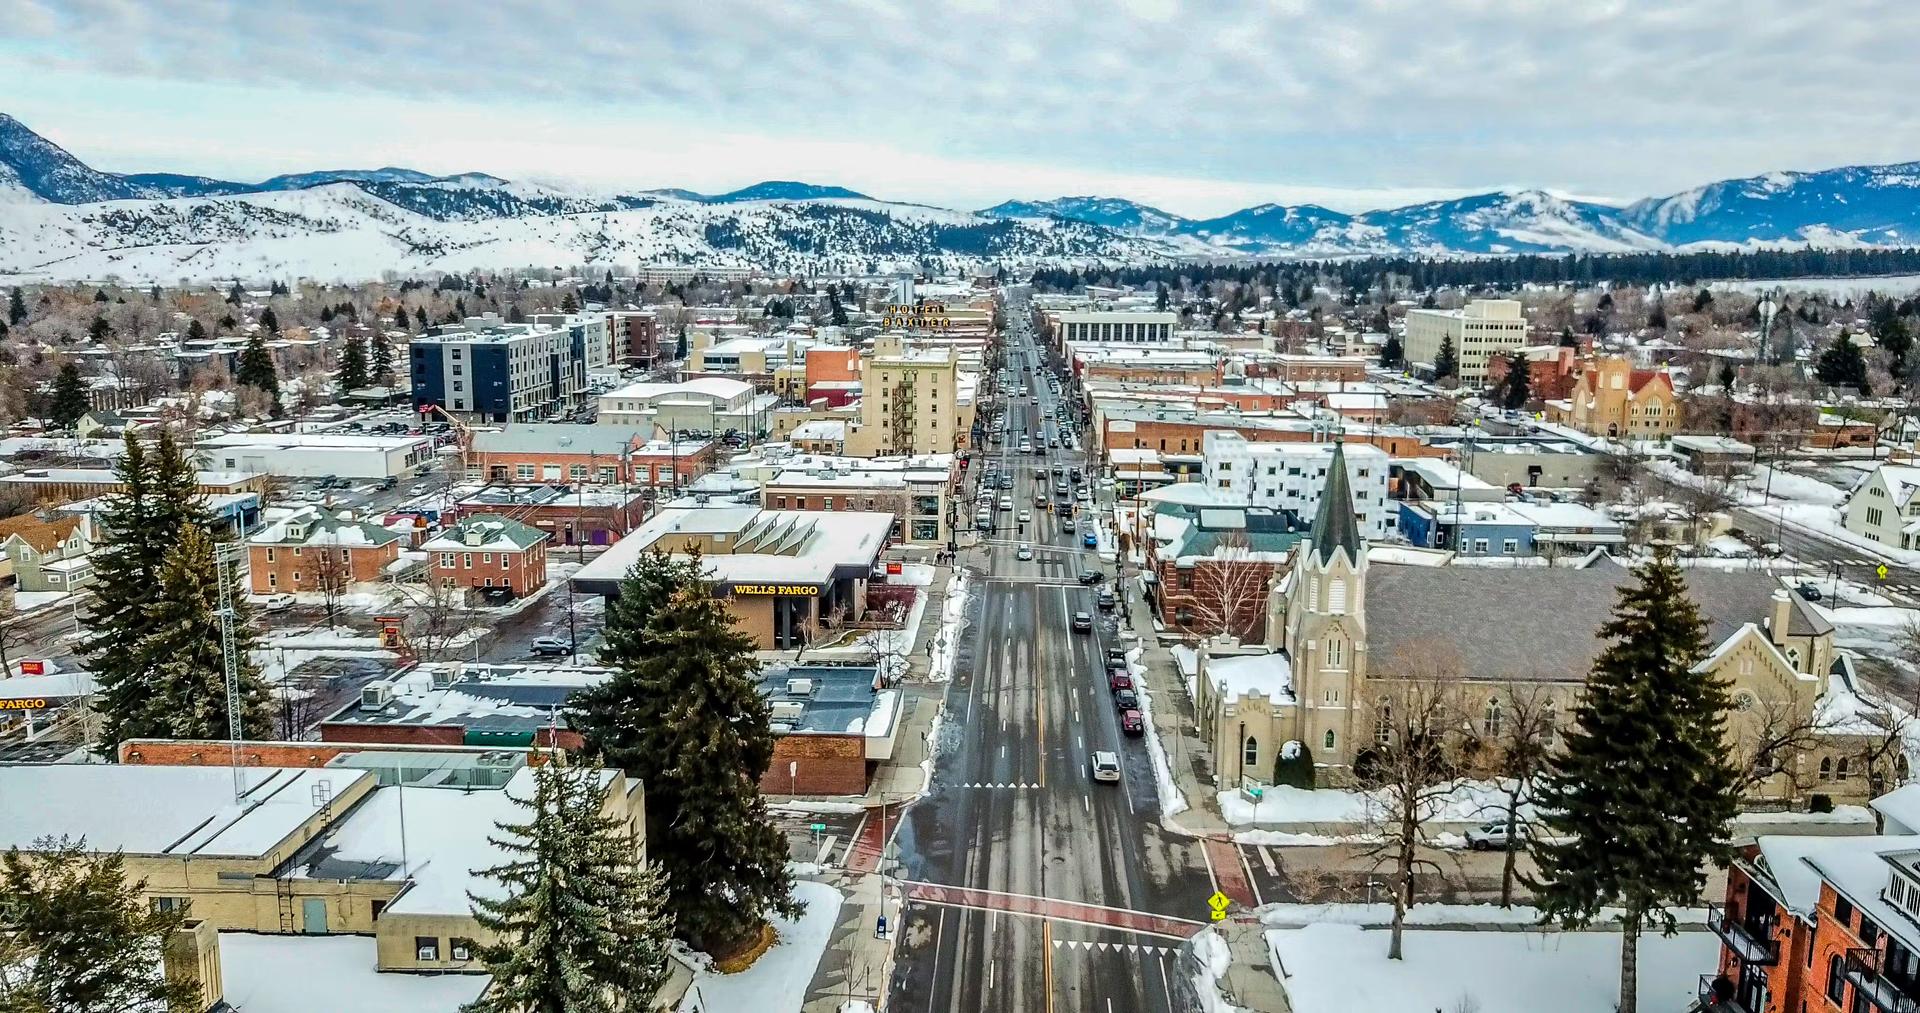 Aerial view of Main Street in Bozeman Montana